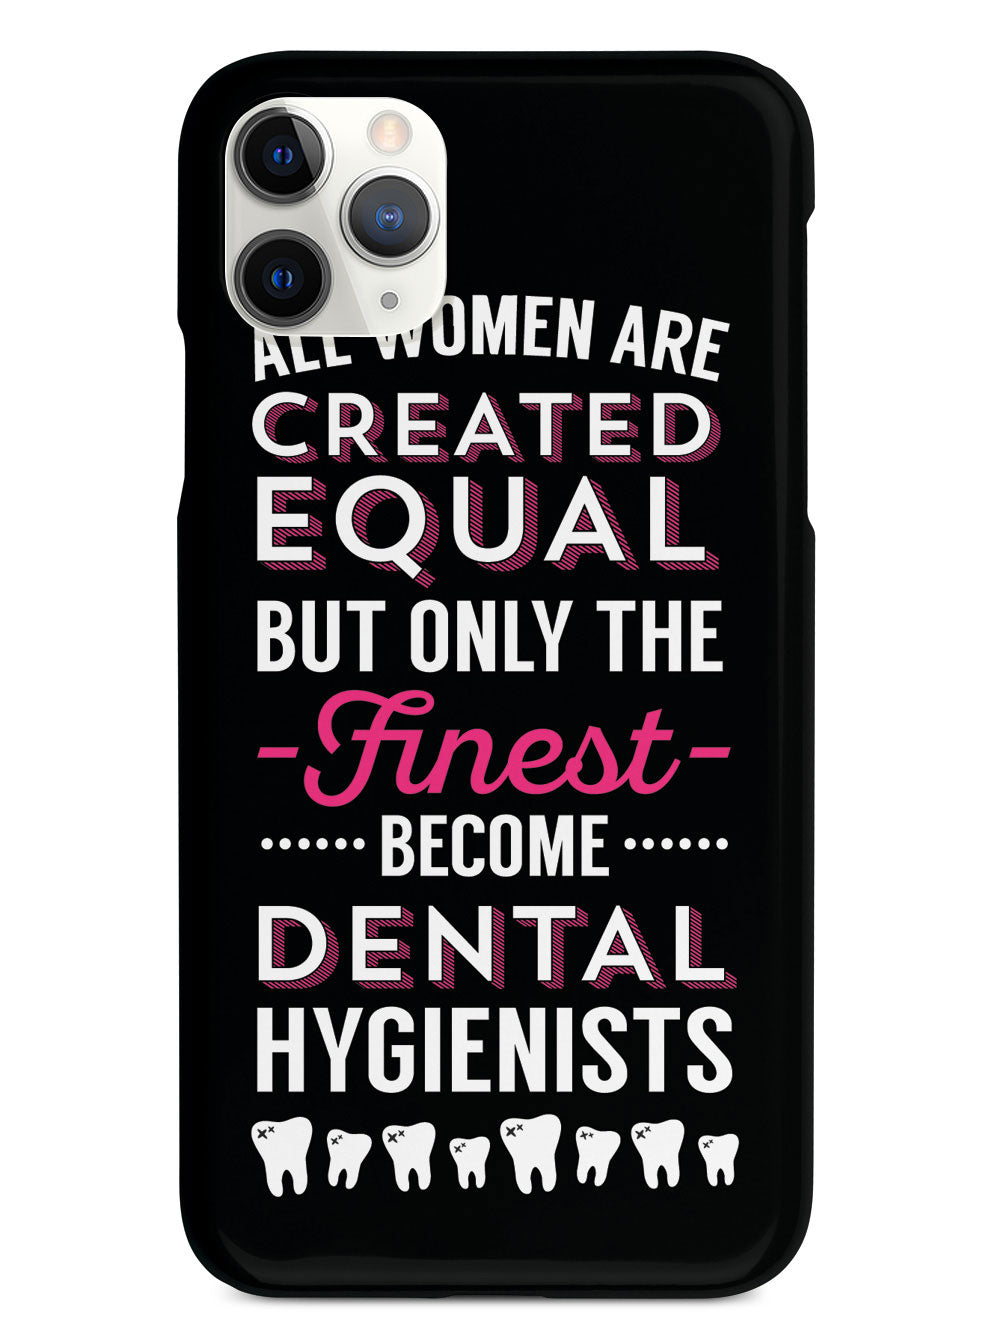 Only The Finest - Dental Hygienists Case